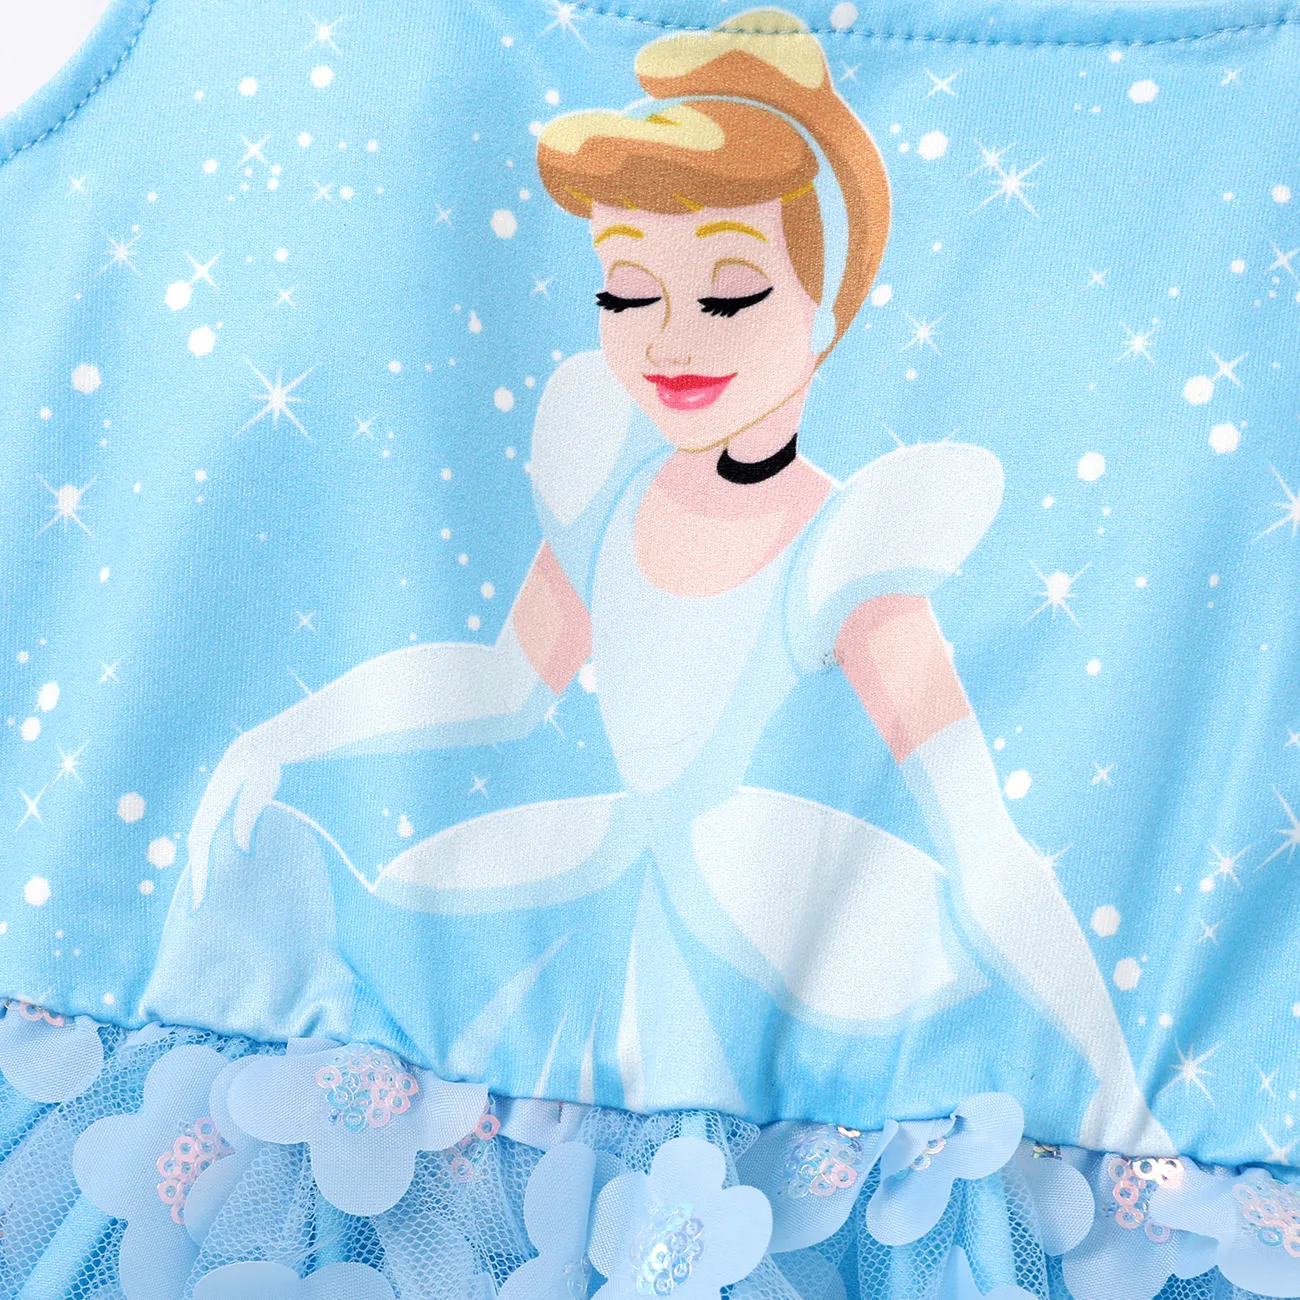 Disney Princess Toddler Girl 2pcs Waffle Lace Trim Cardigan and 3D Floral Applique Slip Fairy Dress Set  Blue big image 1